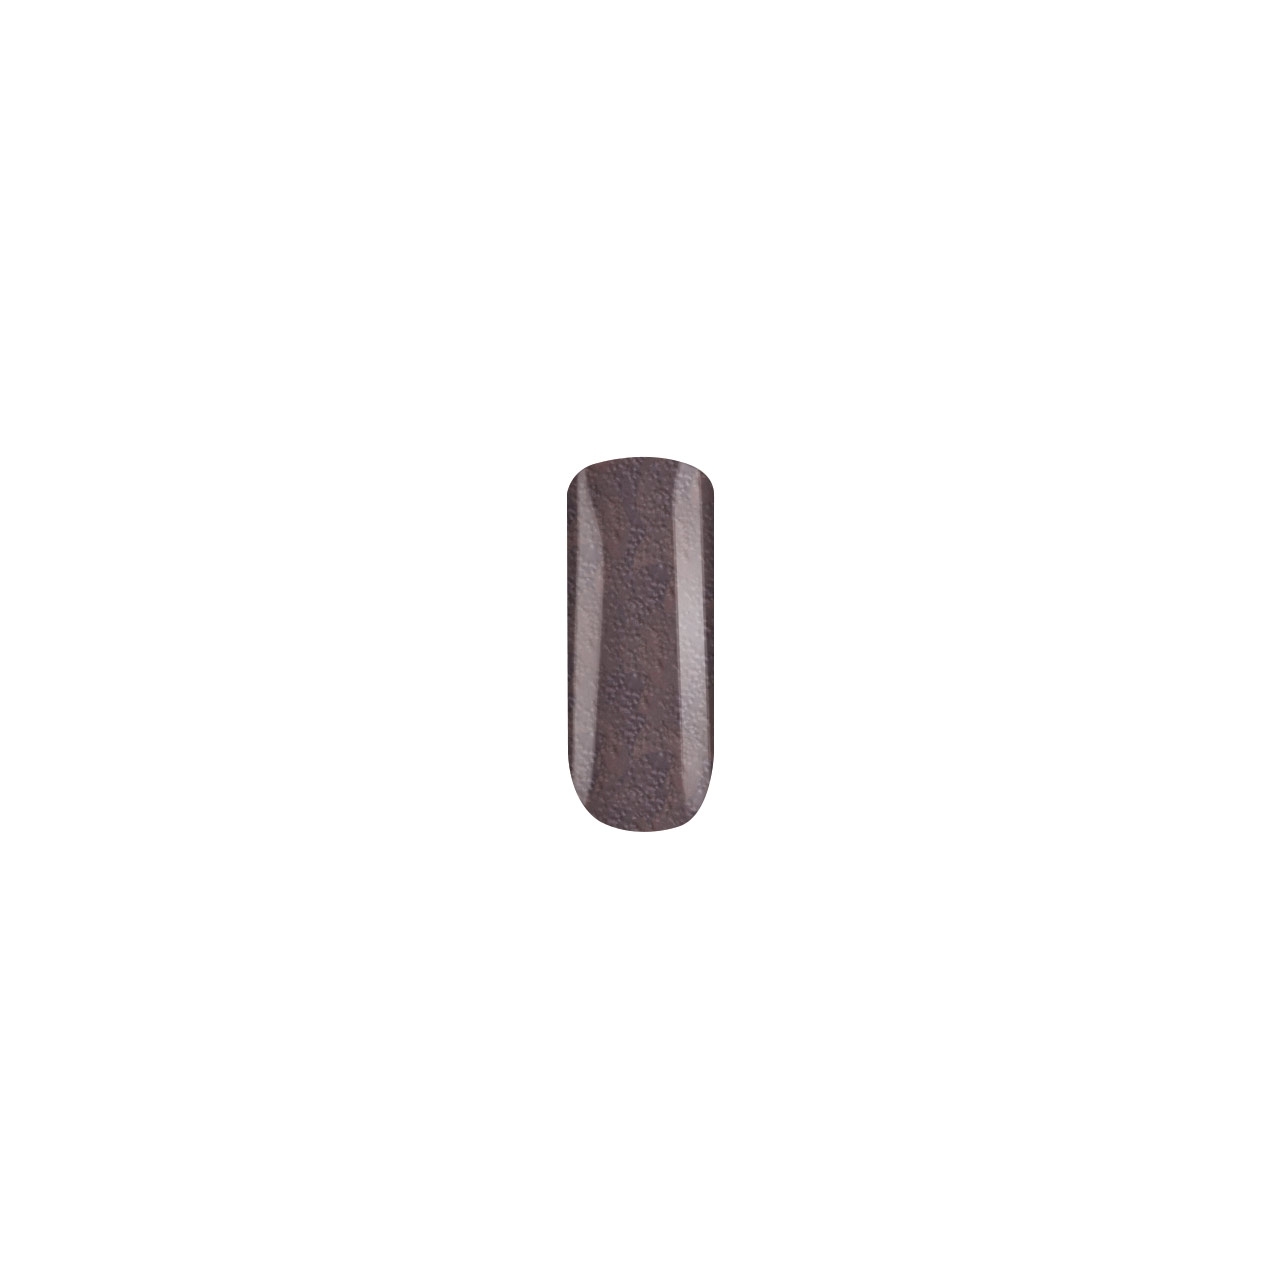 BAEHR BEAUTY CONCEPT - NAILS Nagellack sand dark nude 11 ml